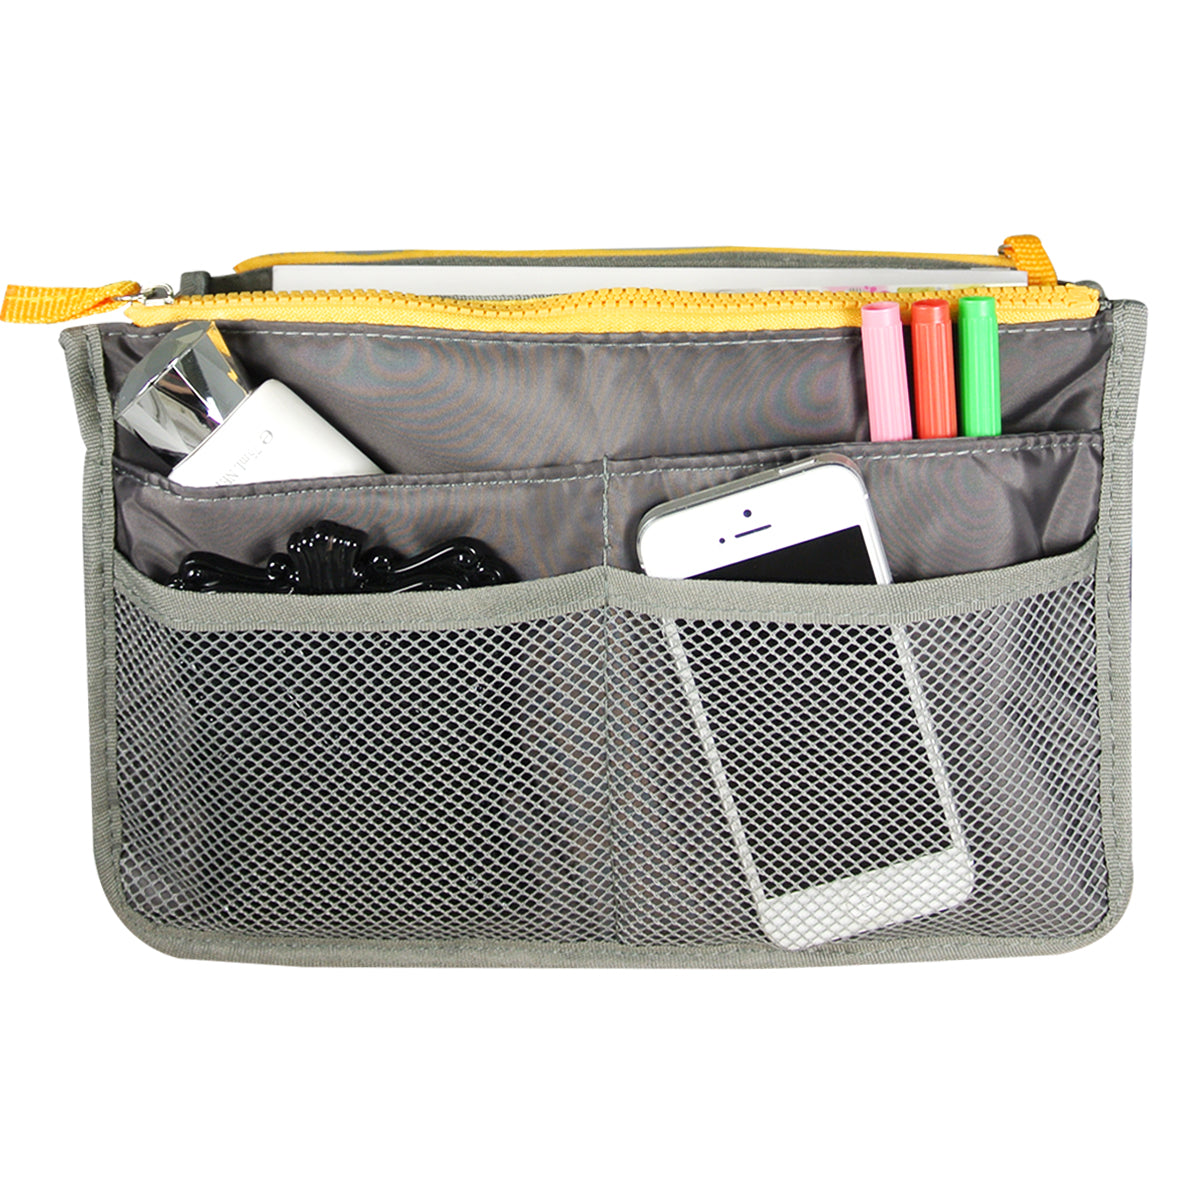 Wrapables Bag Insert/Travel Organizer, Unisex, Grey